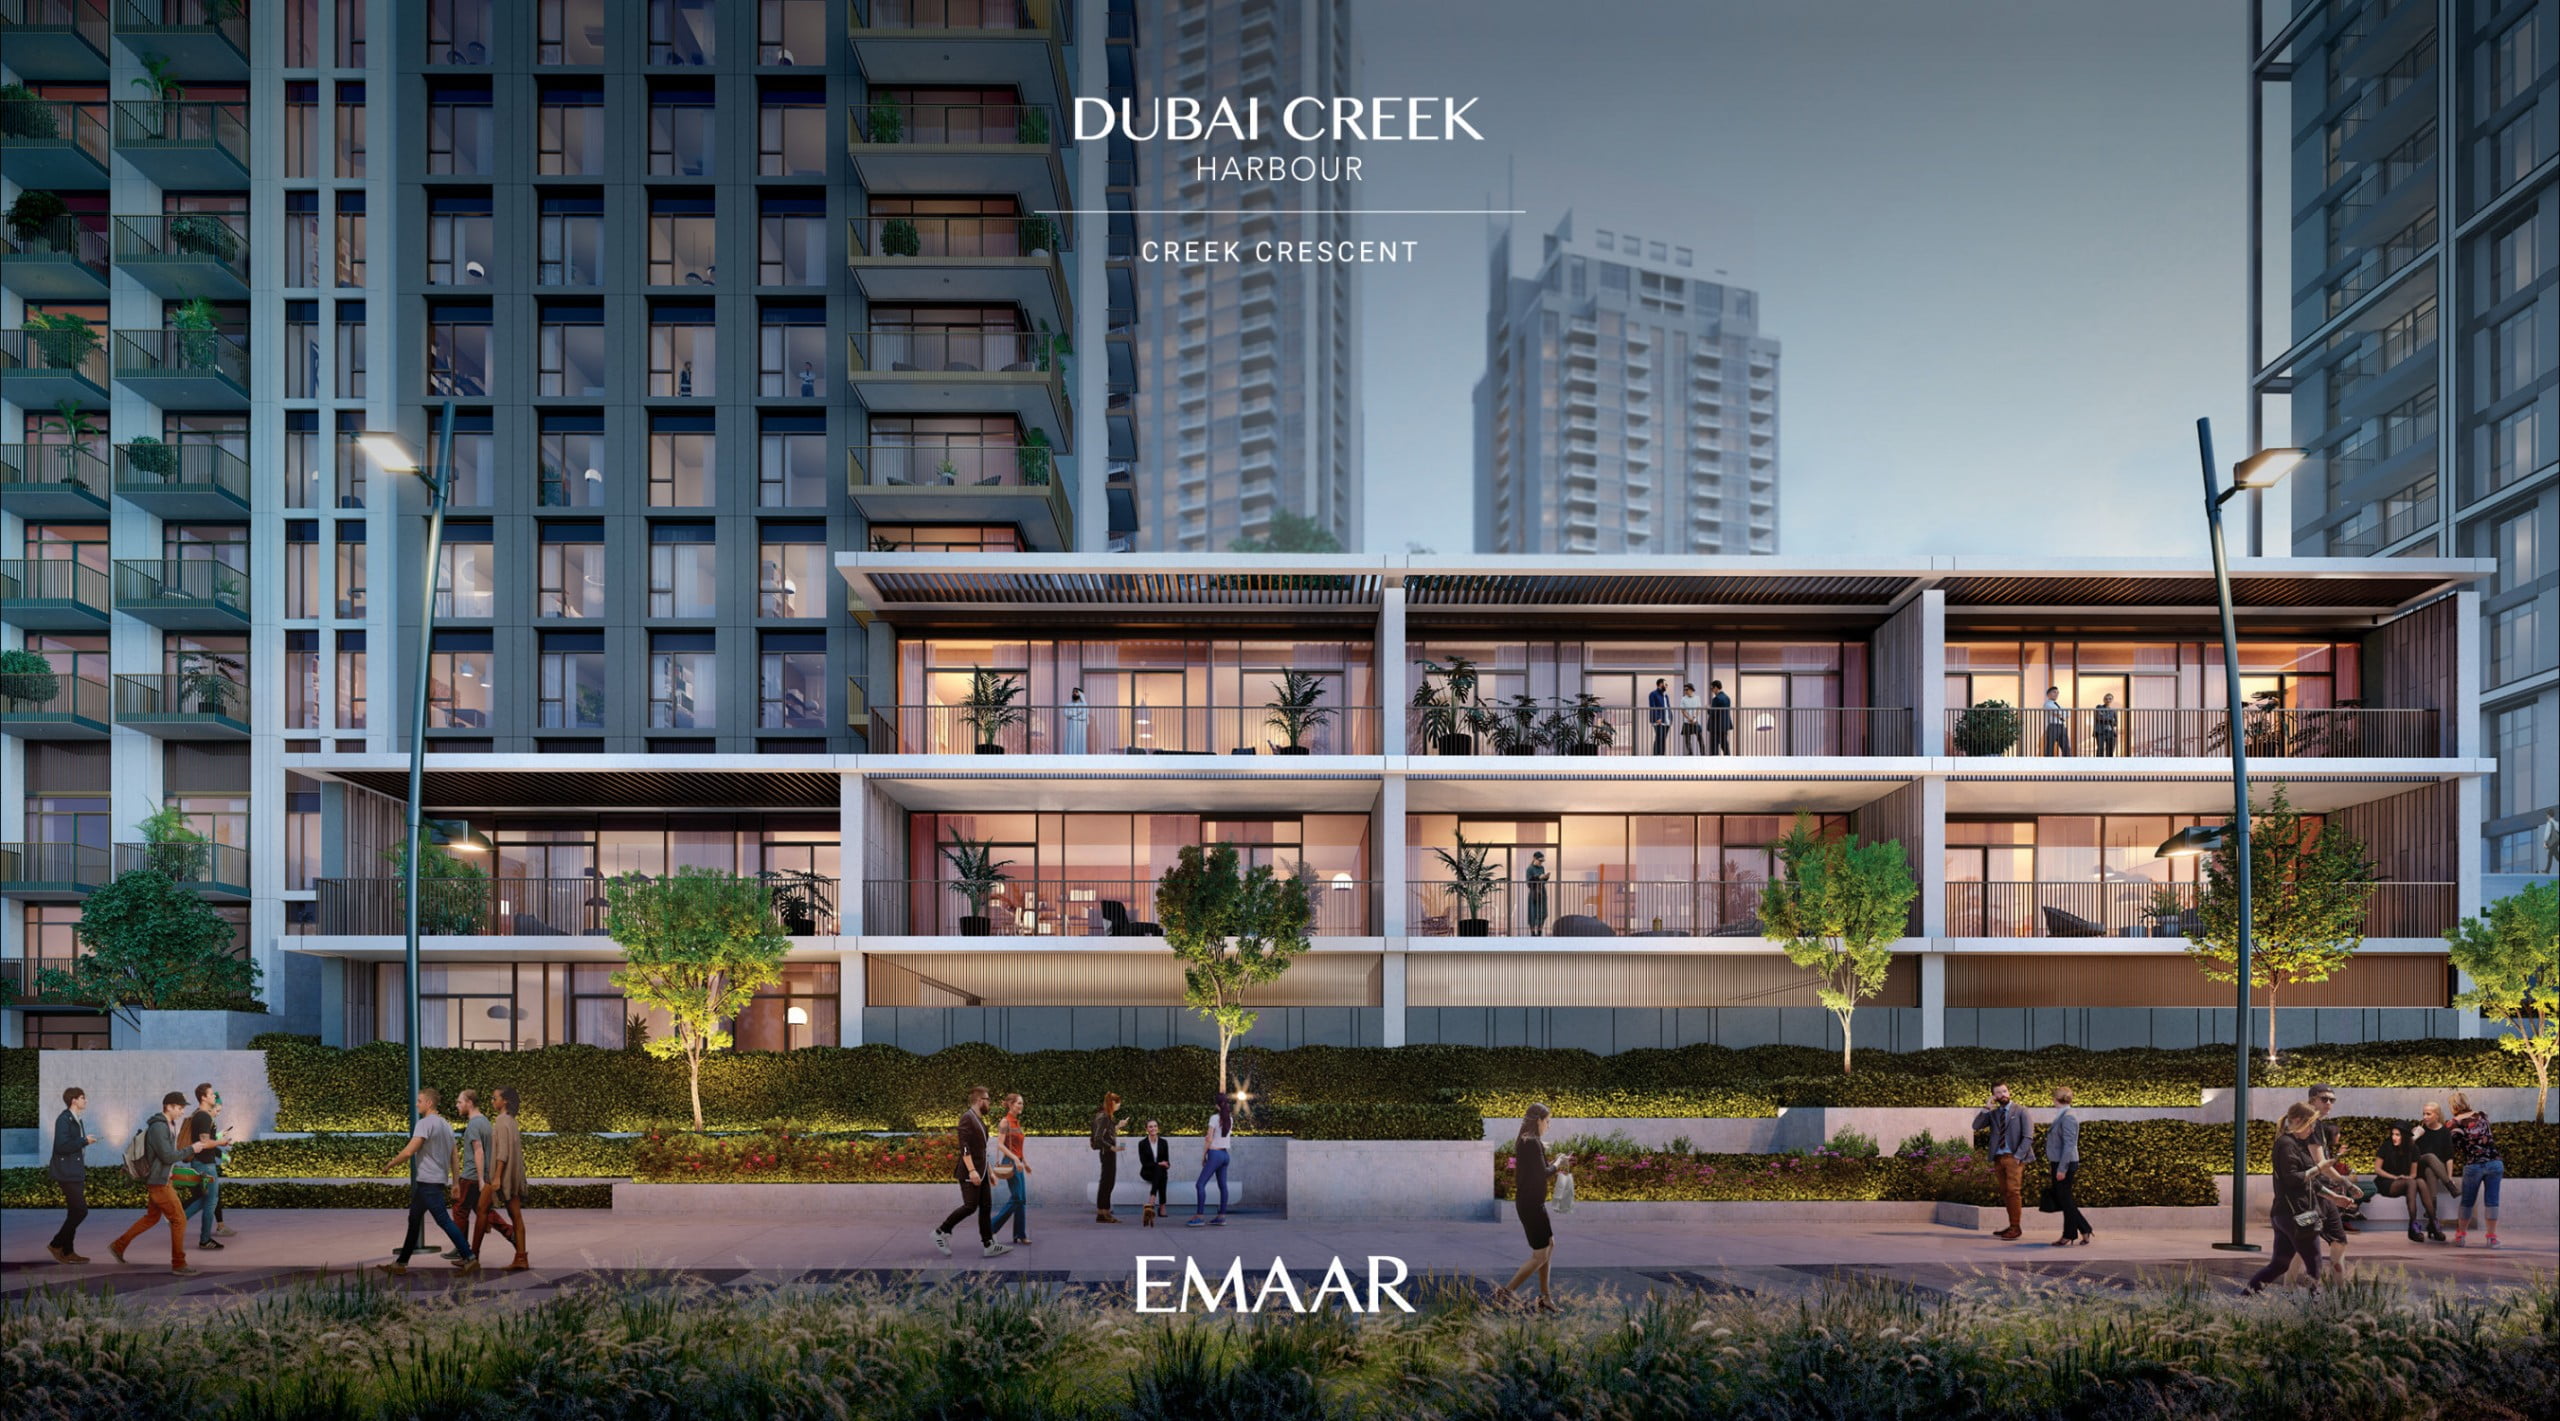 CREEK CRESCENT DUBAI CREEK HARBOUR 05 scaled - Immobilier Dubai